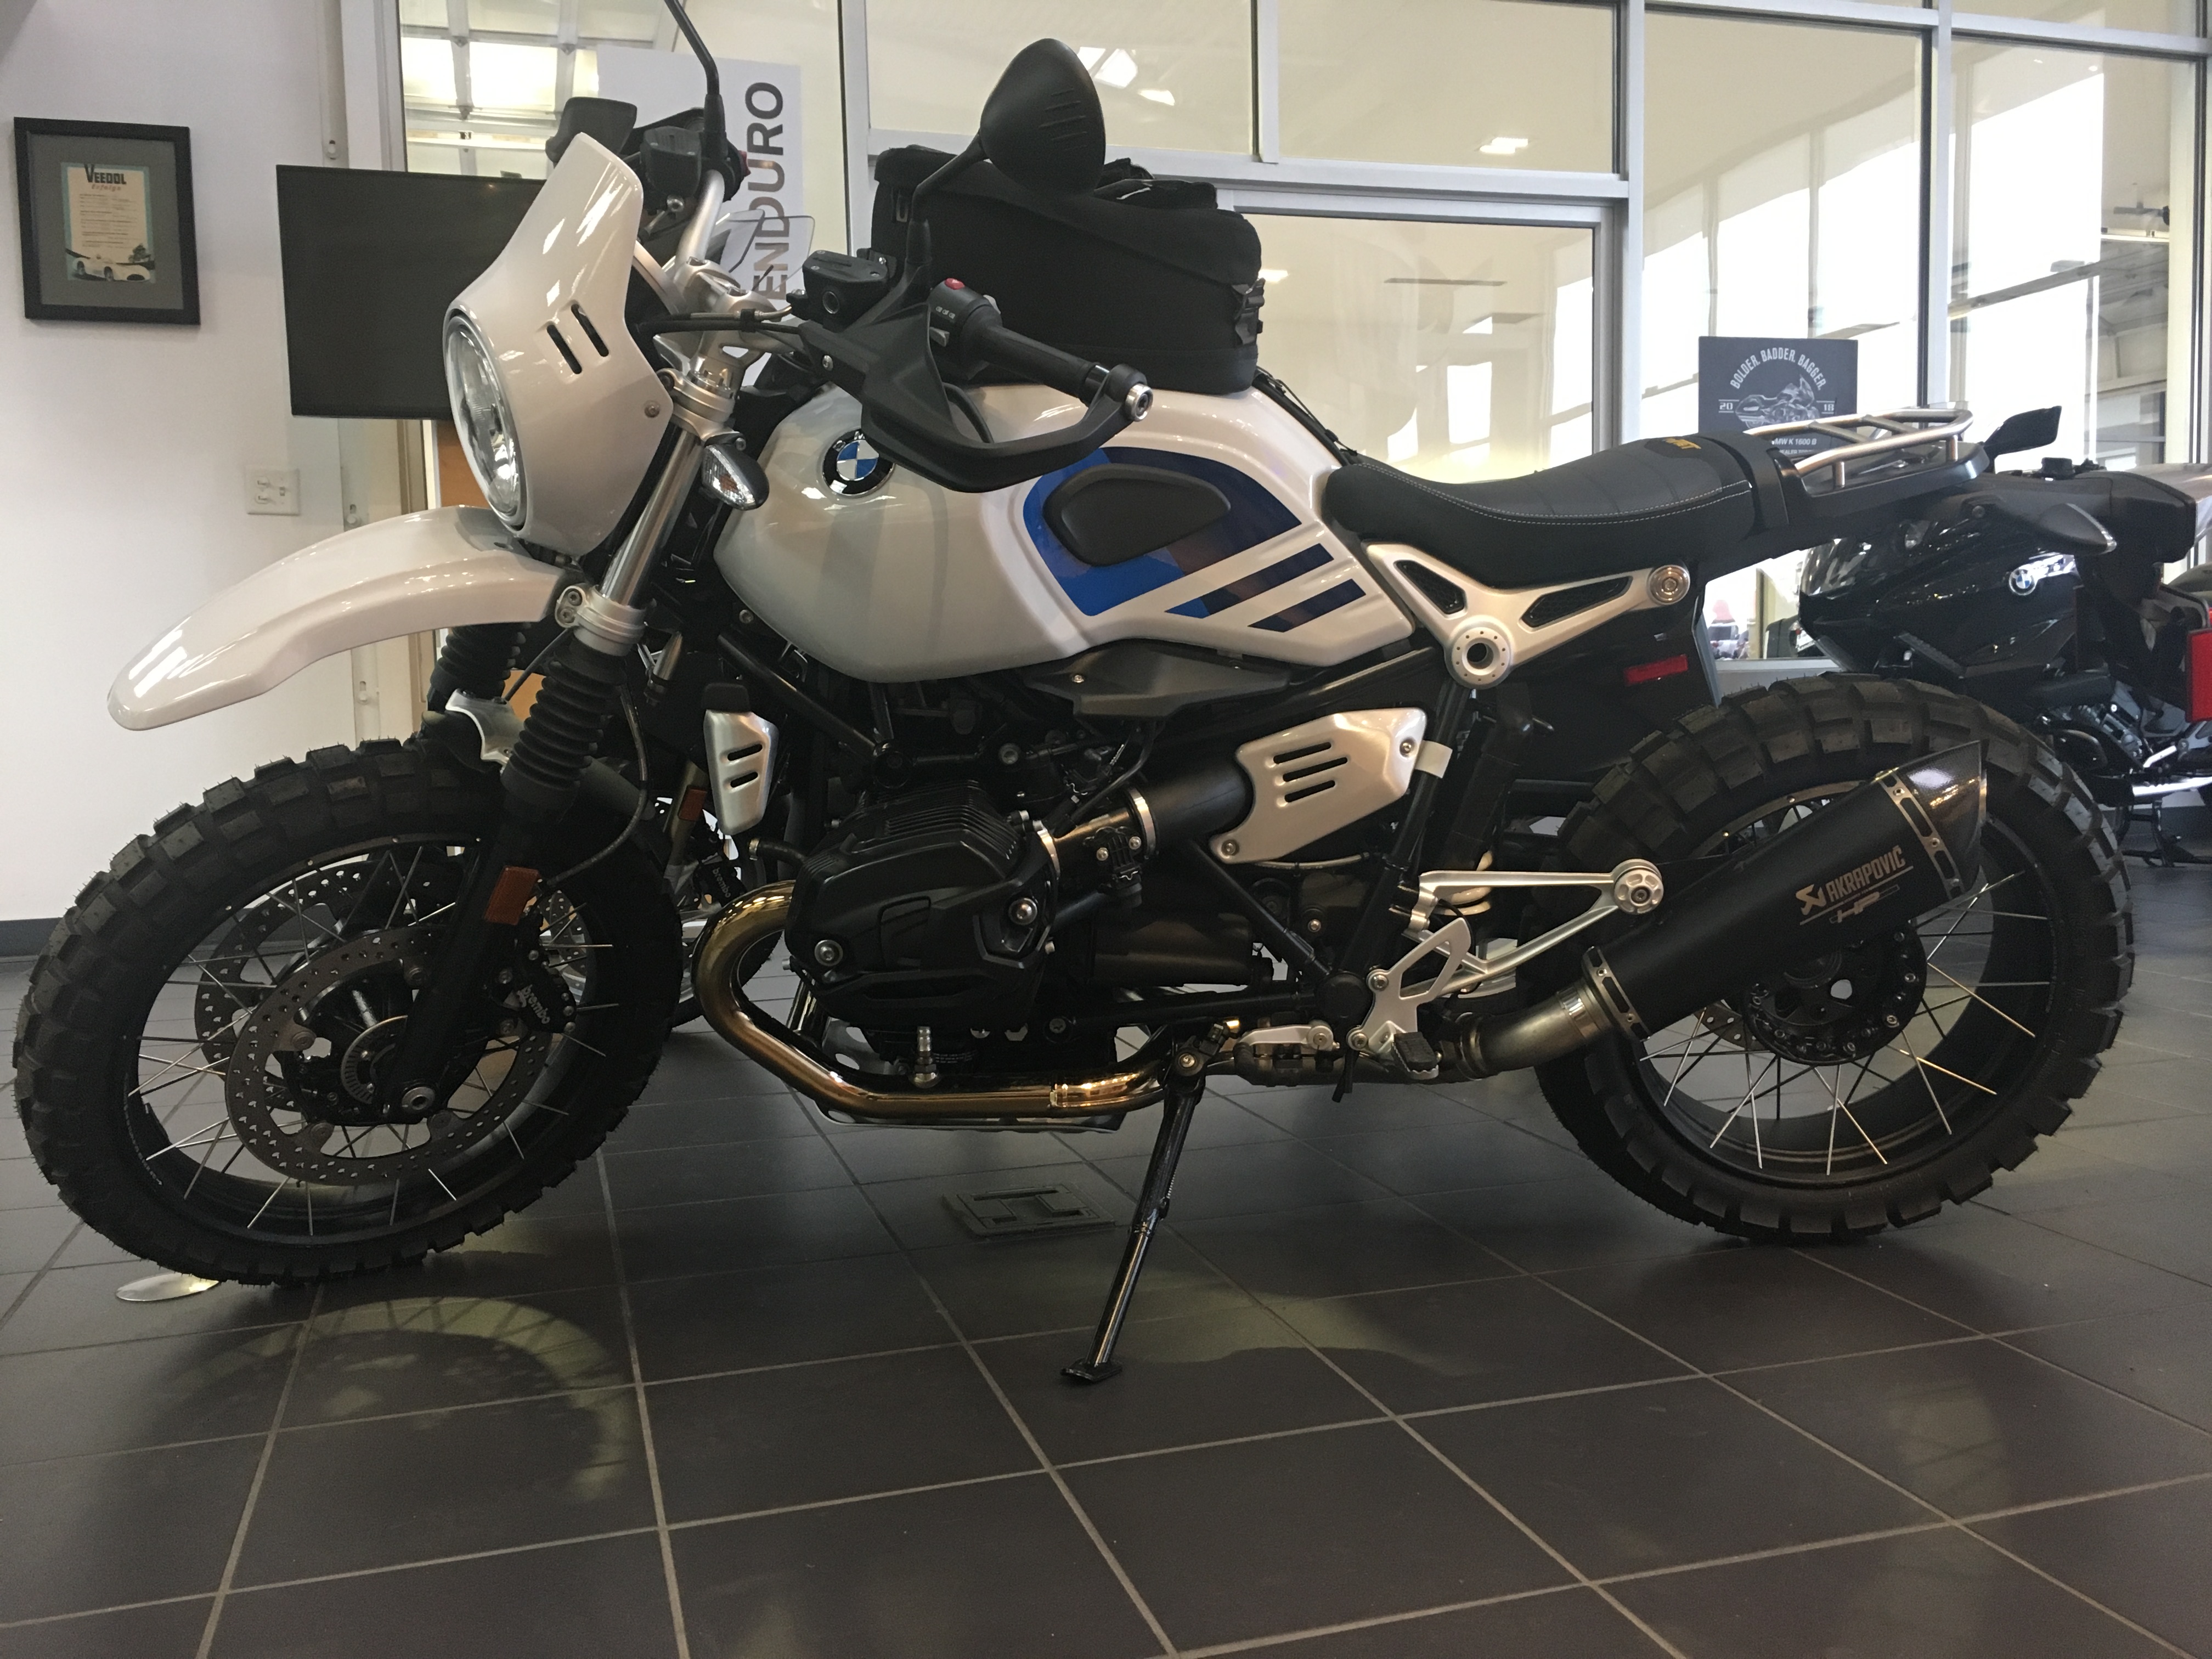 New Motorcycle Inventory - RNINET - Sandia BMW Motorcycles - Albuquerque, NM.